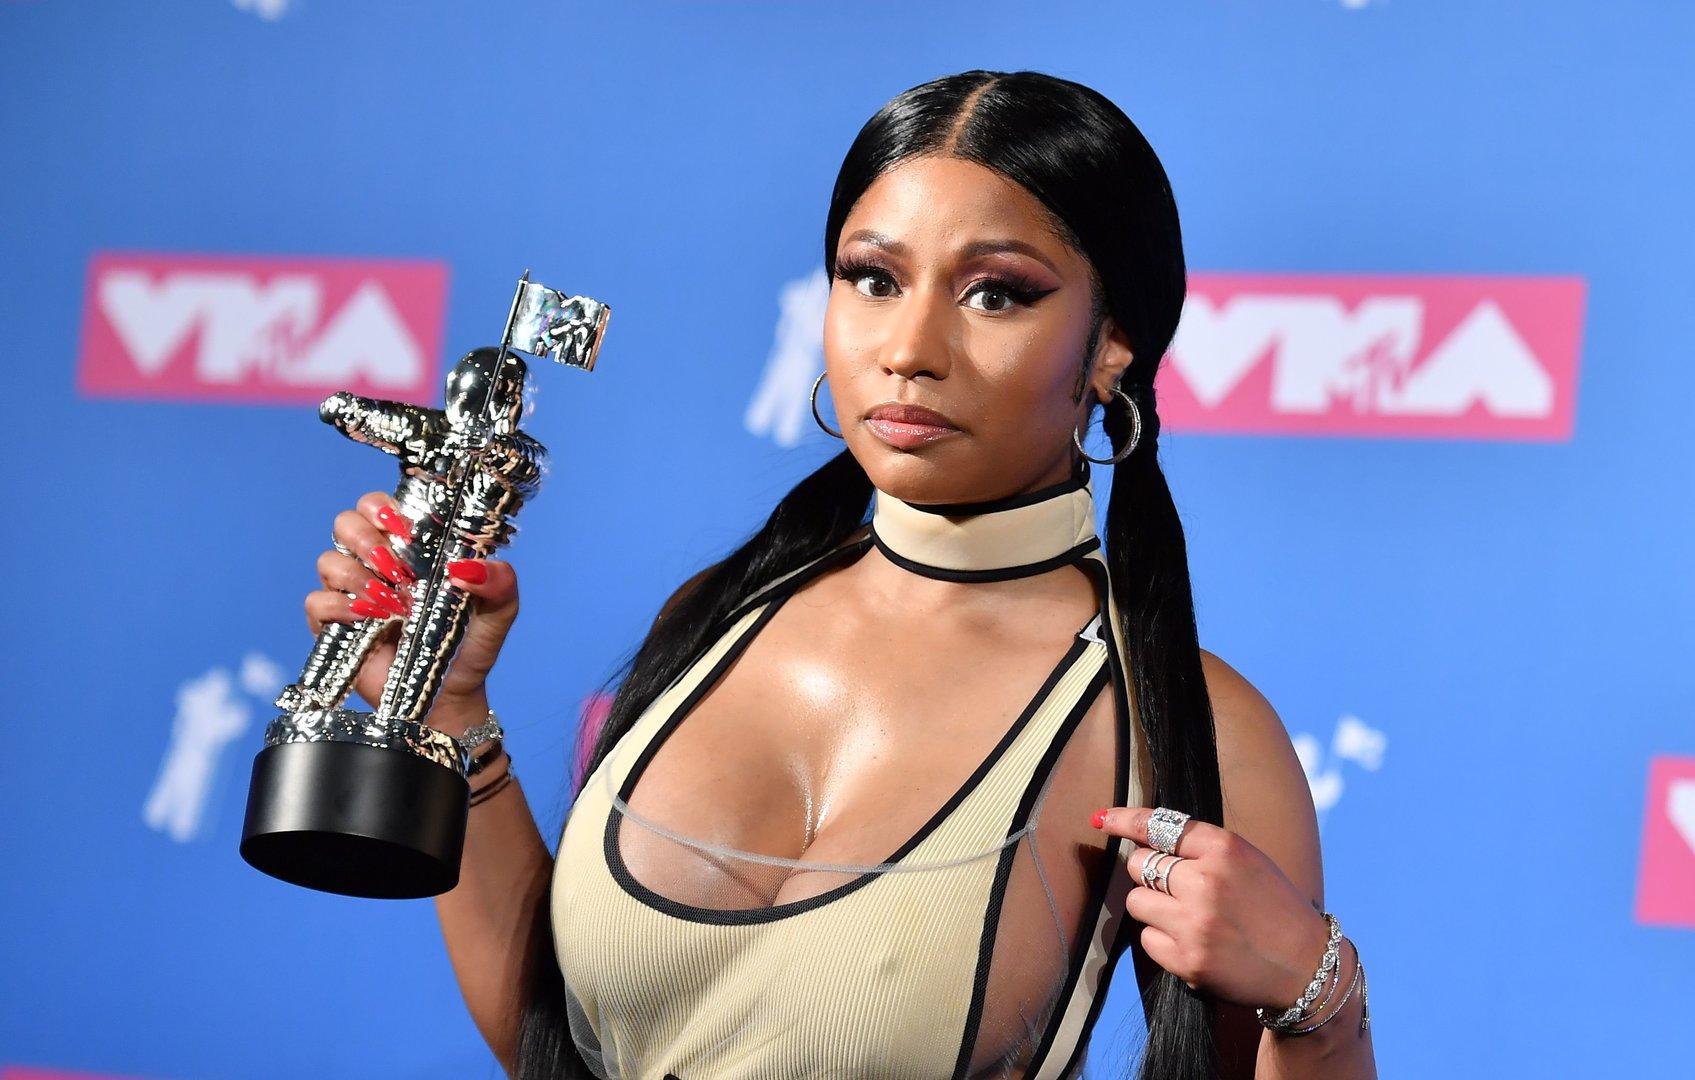 Knalleffekt: Rapperin Nicki Minaj verkündet ihren Rückzug